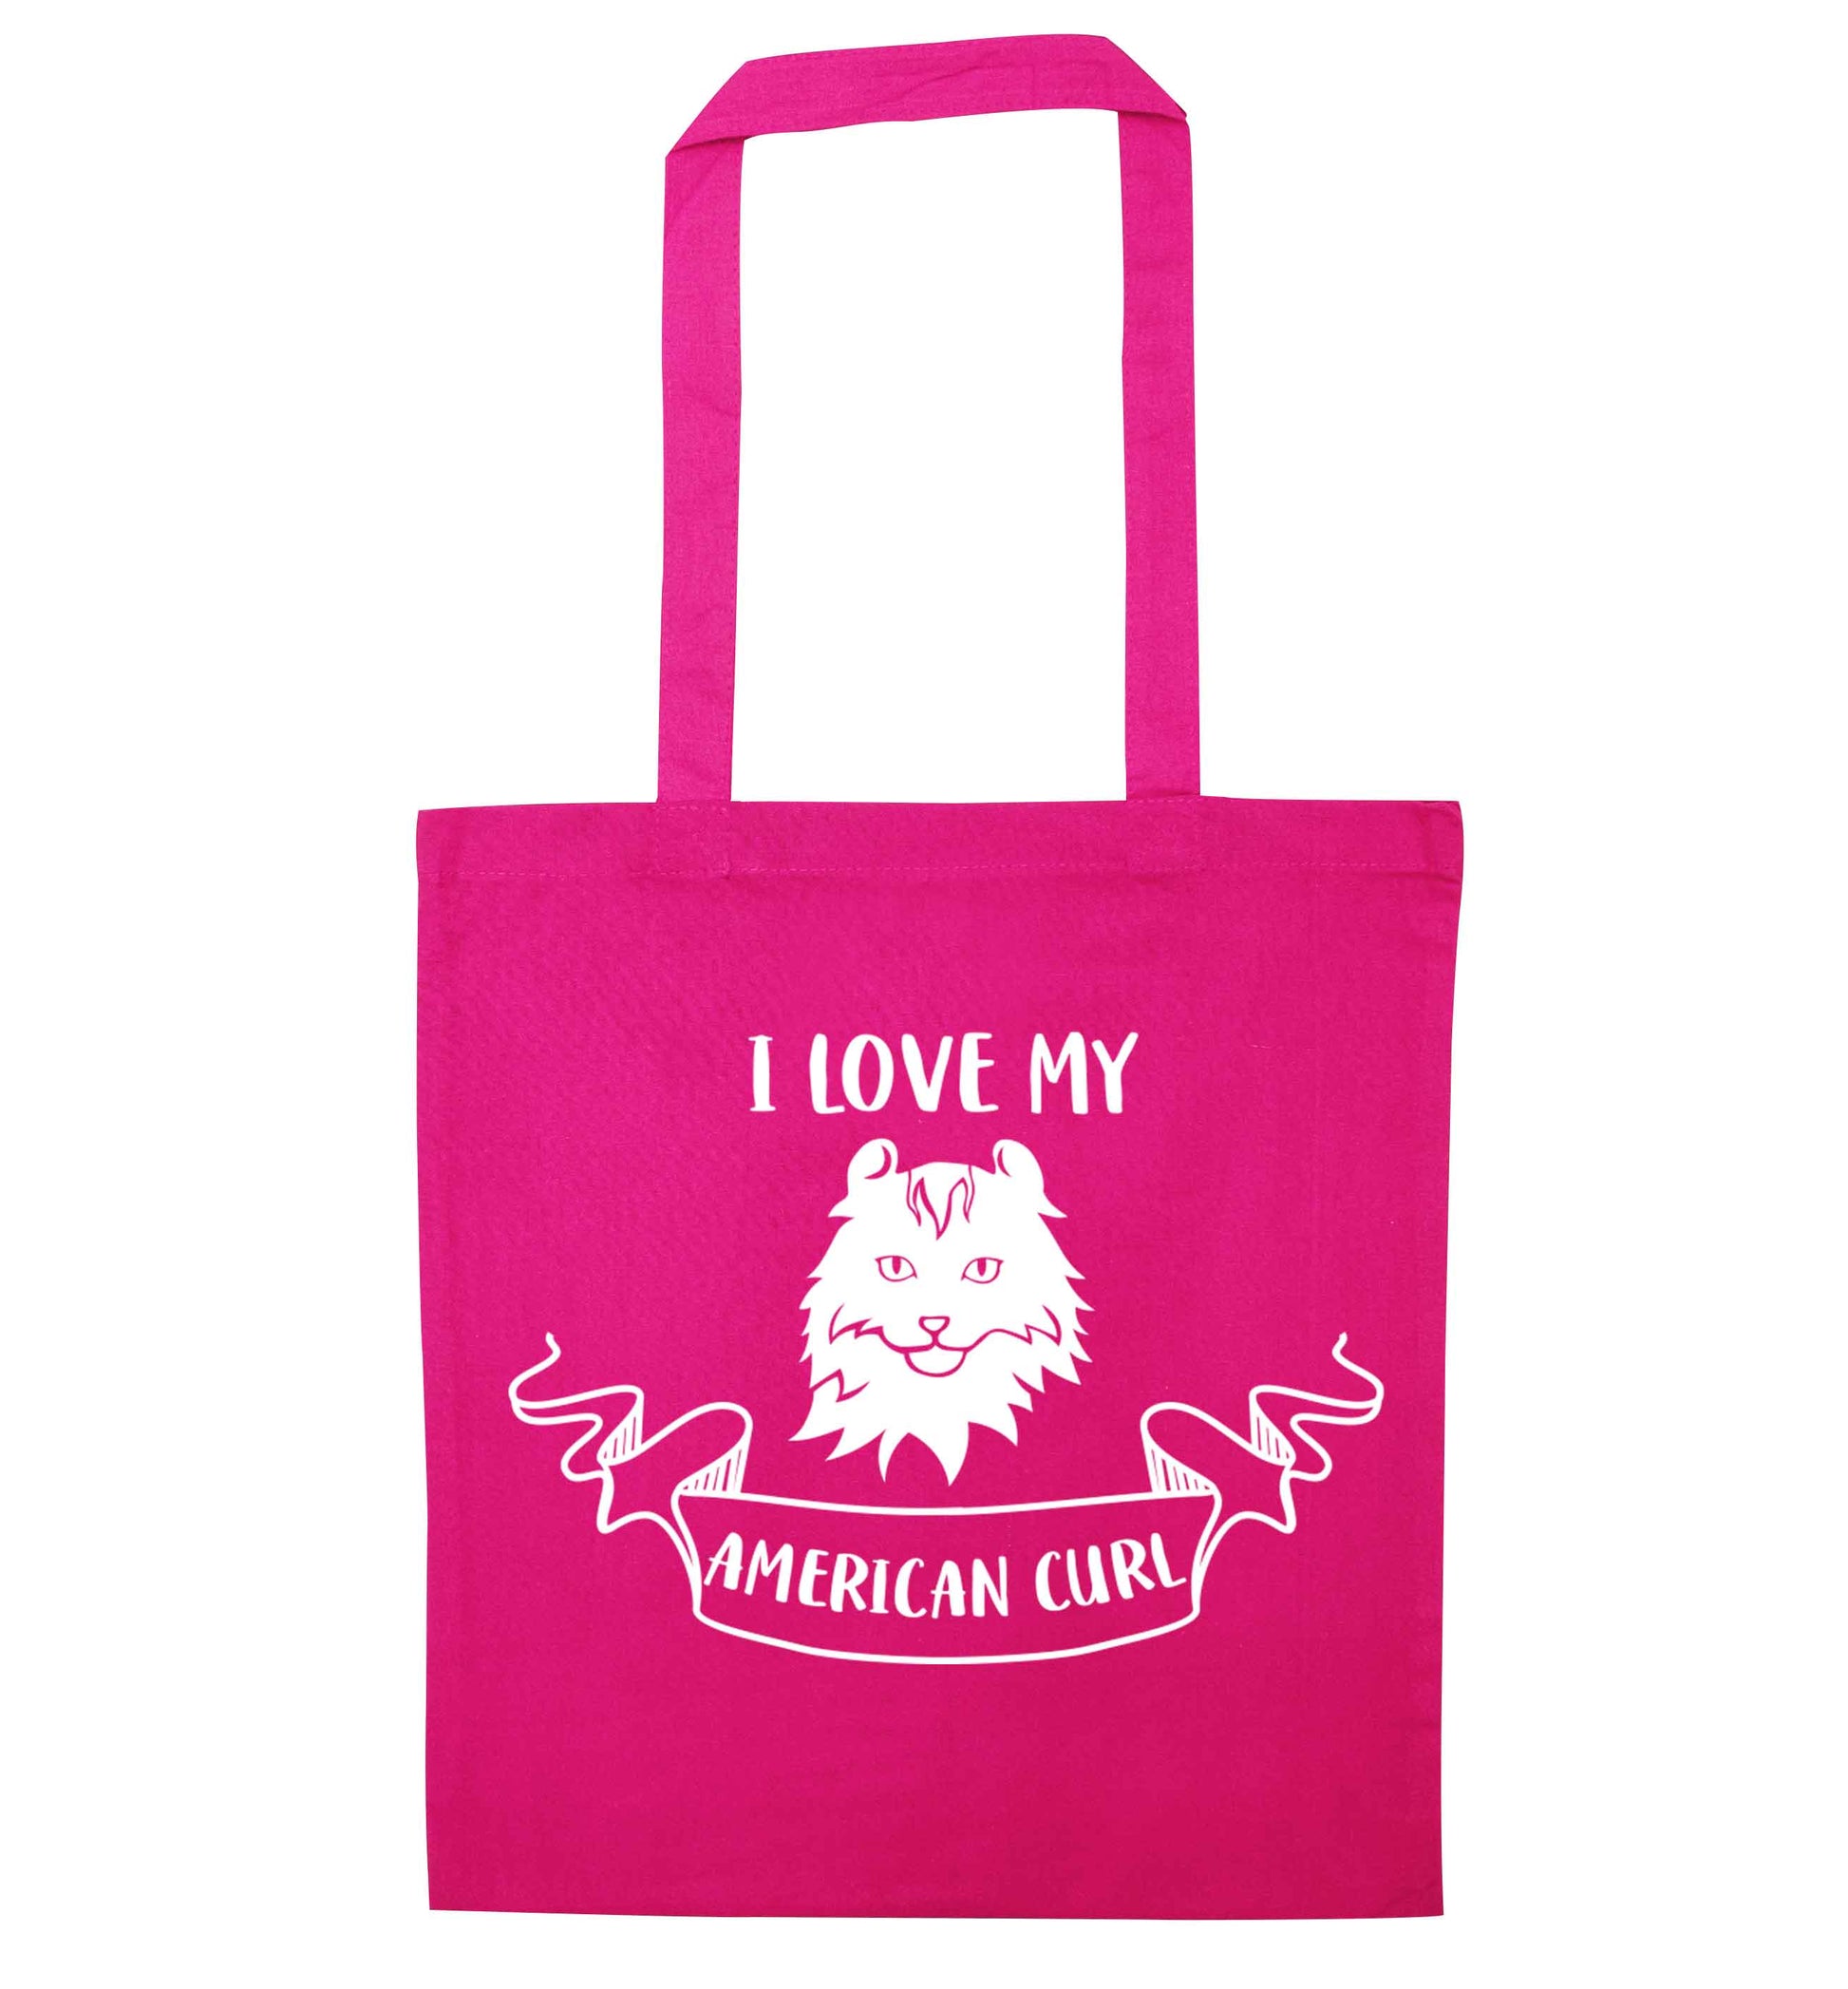 I love my American curl pink tote bag